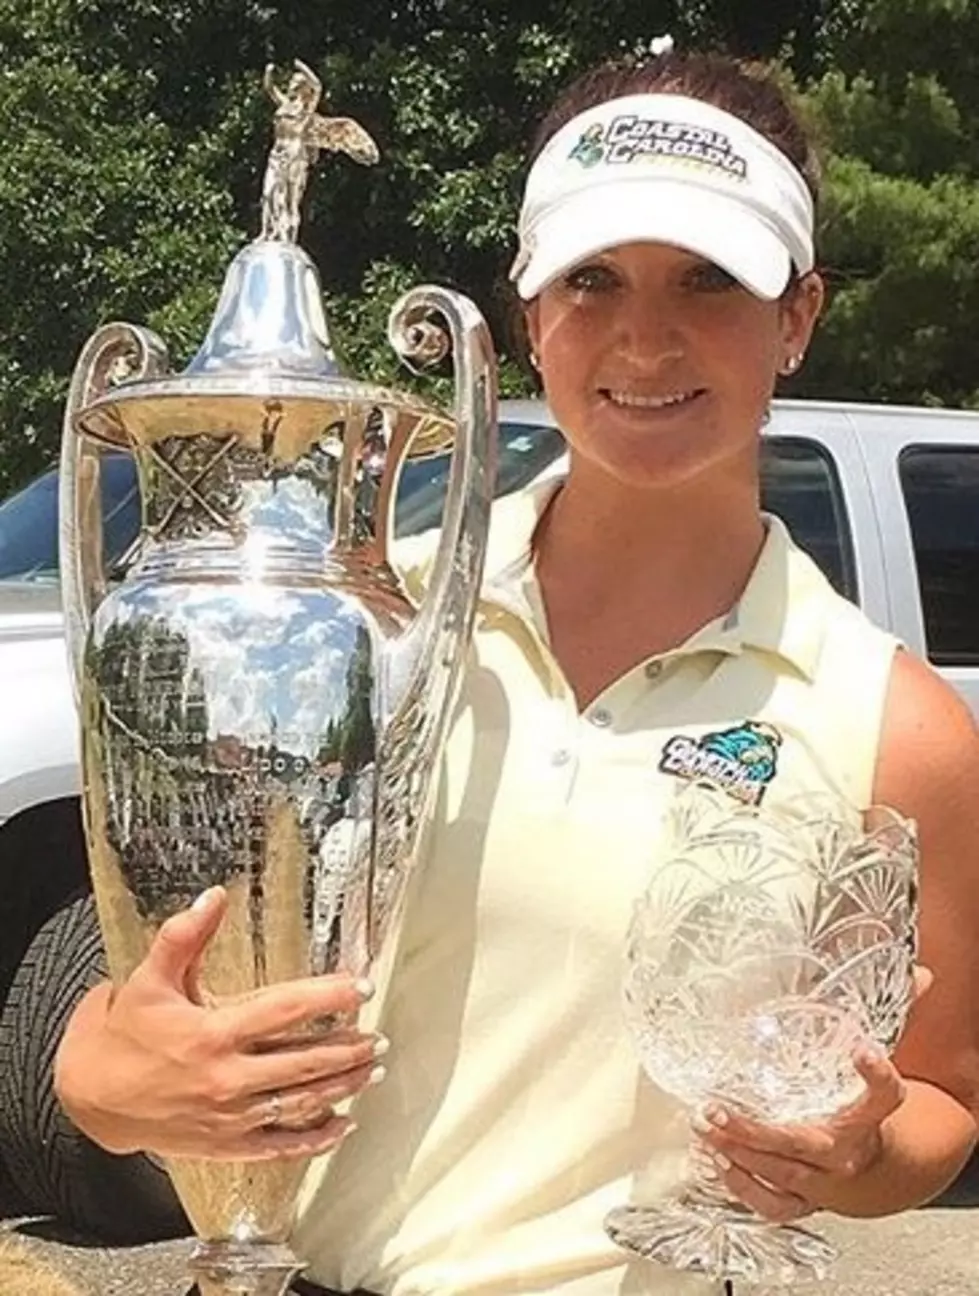 Capital Region Golfer Takes Women’s Championship Title